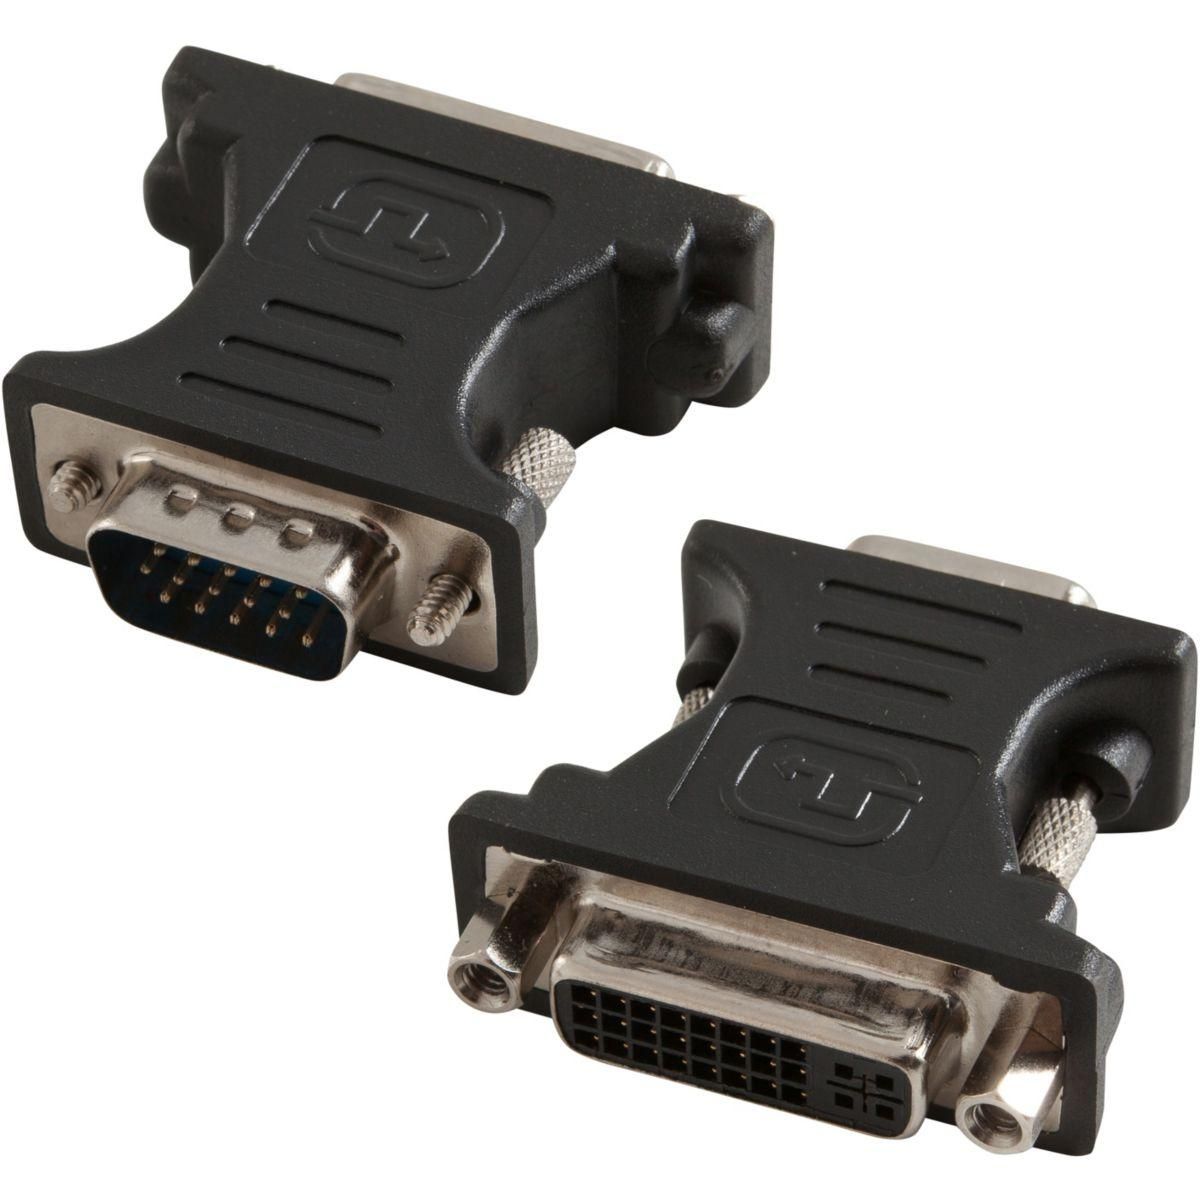 Adaptateur HDMI/VGA ESSENTIELB CONVERTISSEUR HDMI Male vers VGA